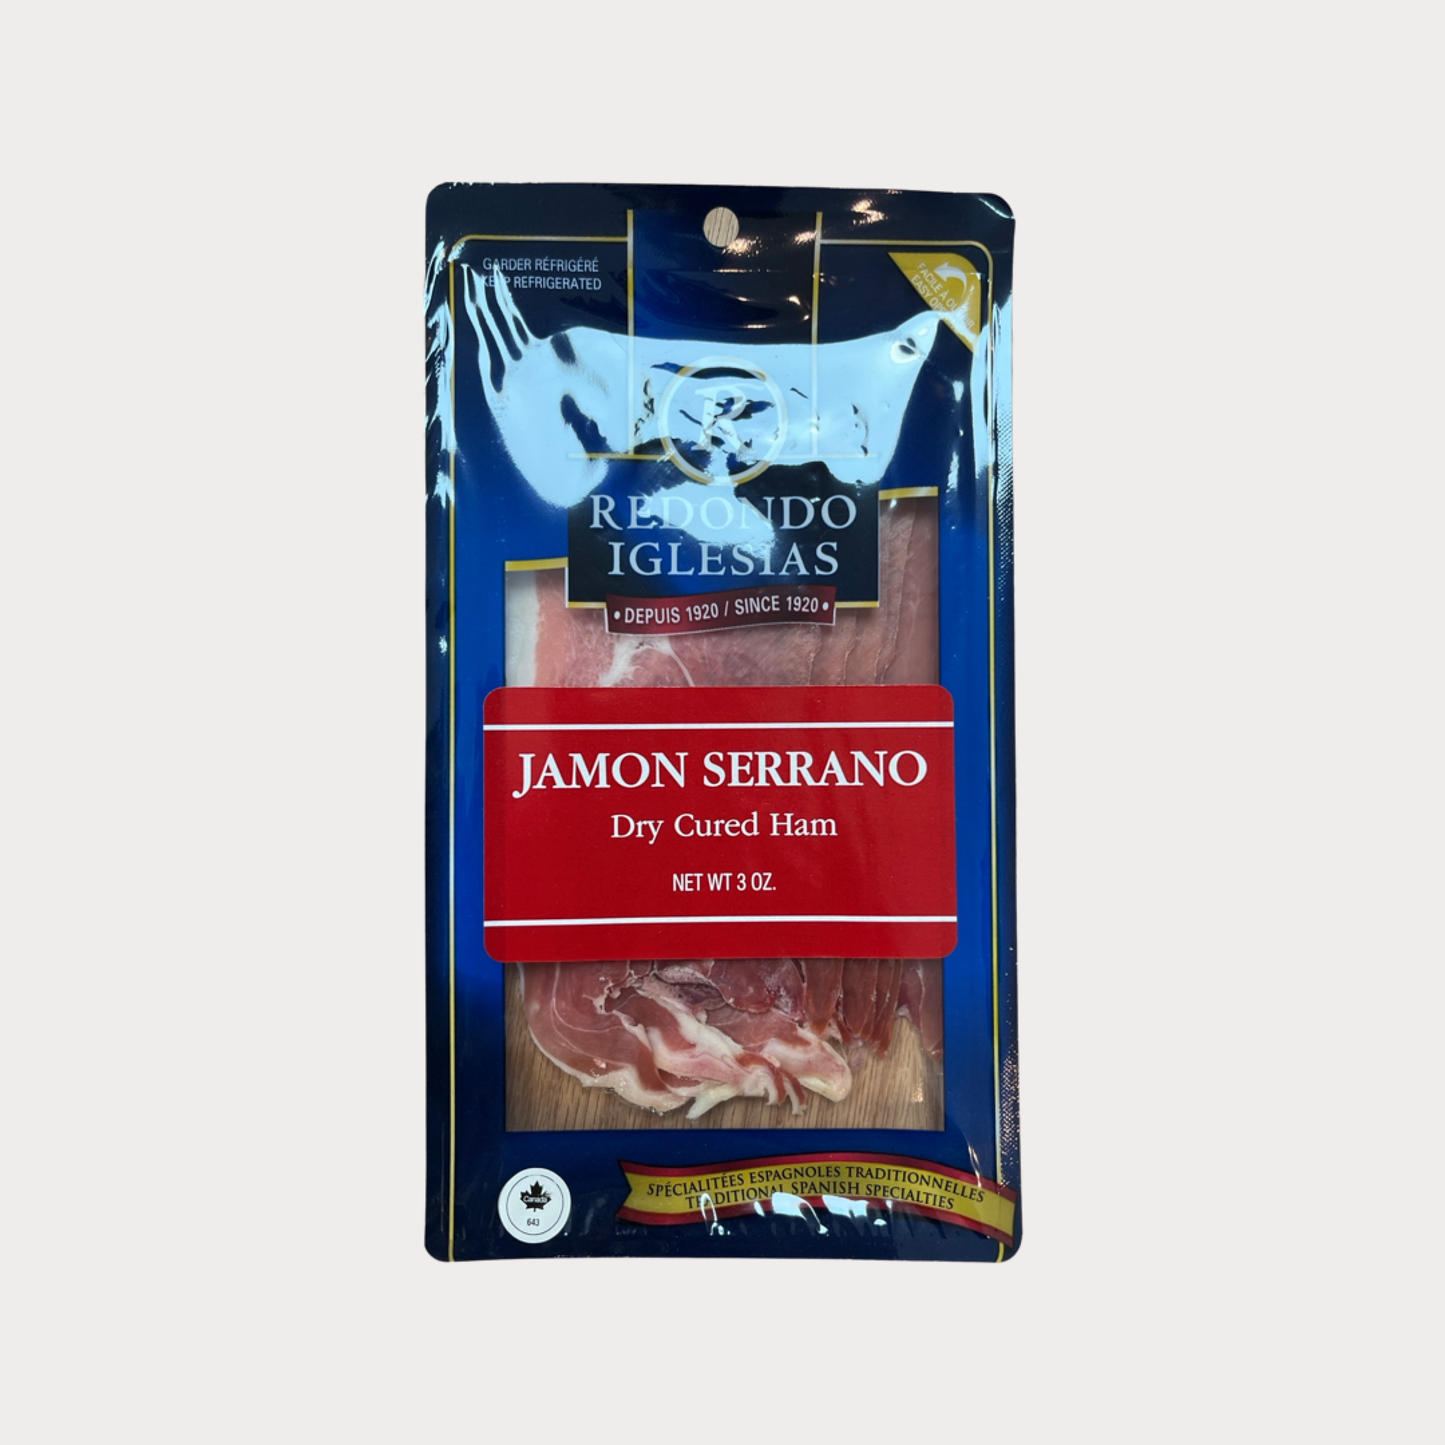 Sliced Serrano Ham Redondo Eglesias Jason